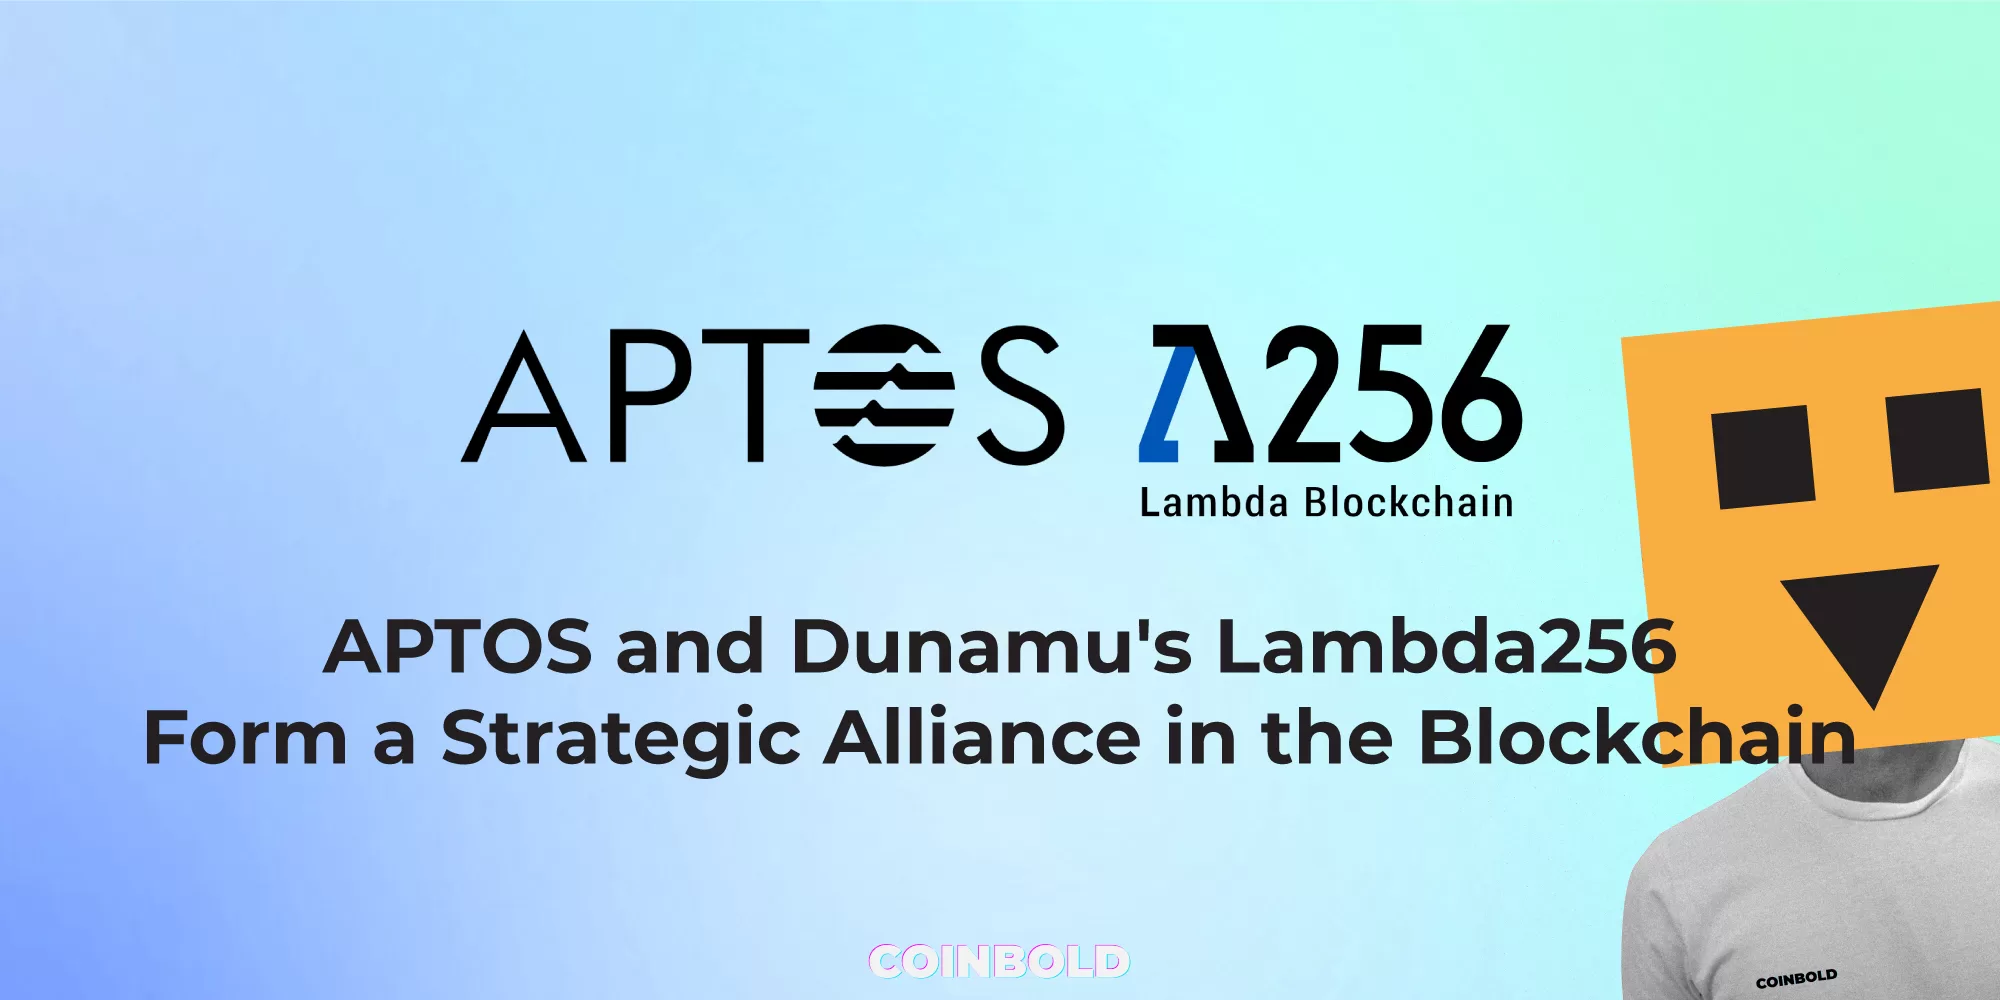 APTOS and Dunamu's Lambda256 Form a Strategic Alliance in the Blockchain